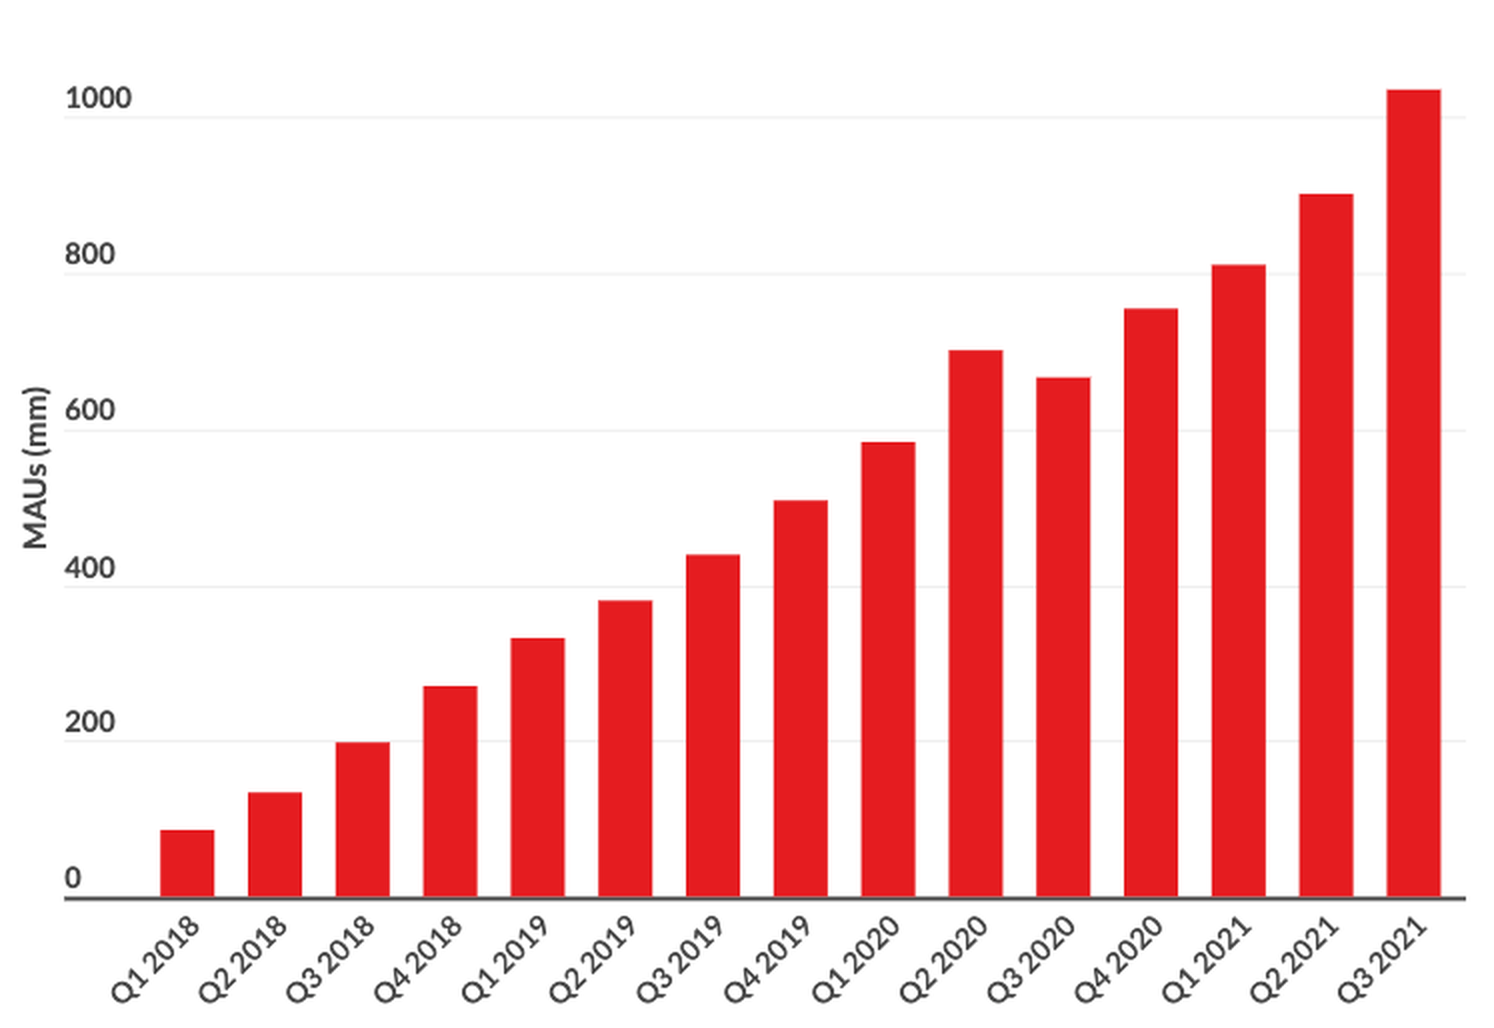 TikTok users over time graph